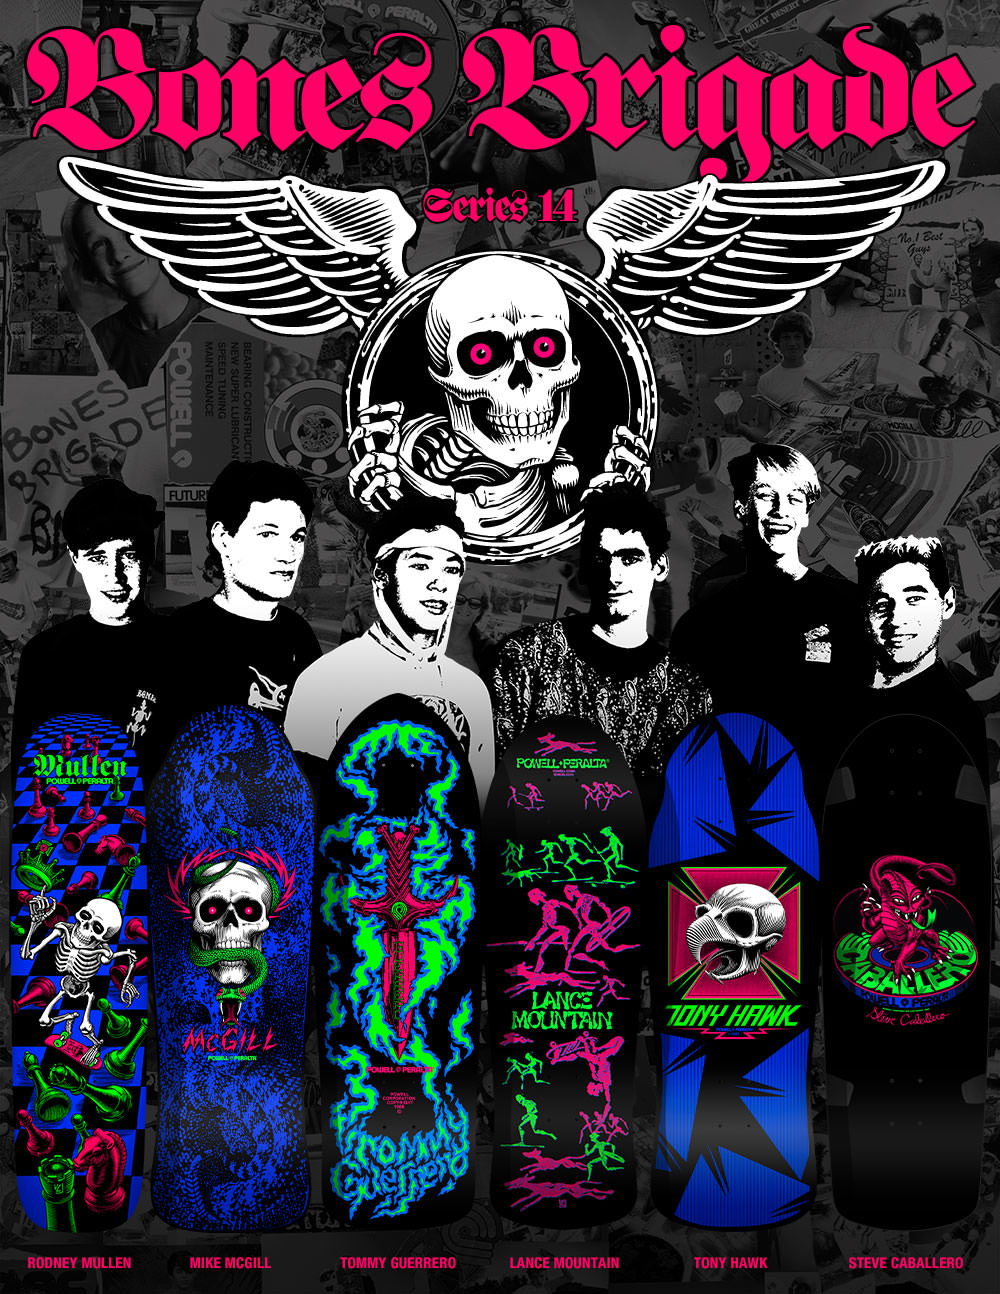 Powell Peralta Bones Brigade Series 14 x6 Skateboard Decks (Mullen, McGill, Guerrero, Mountain, Hawk & Caballero)